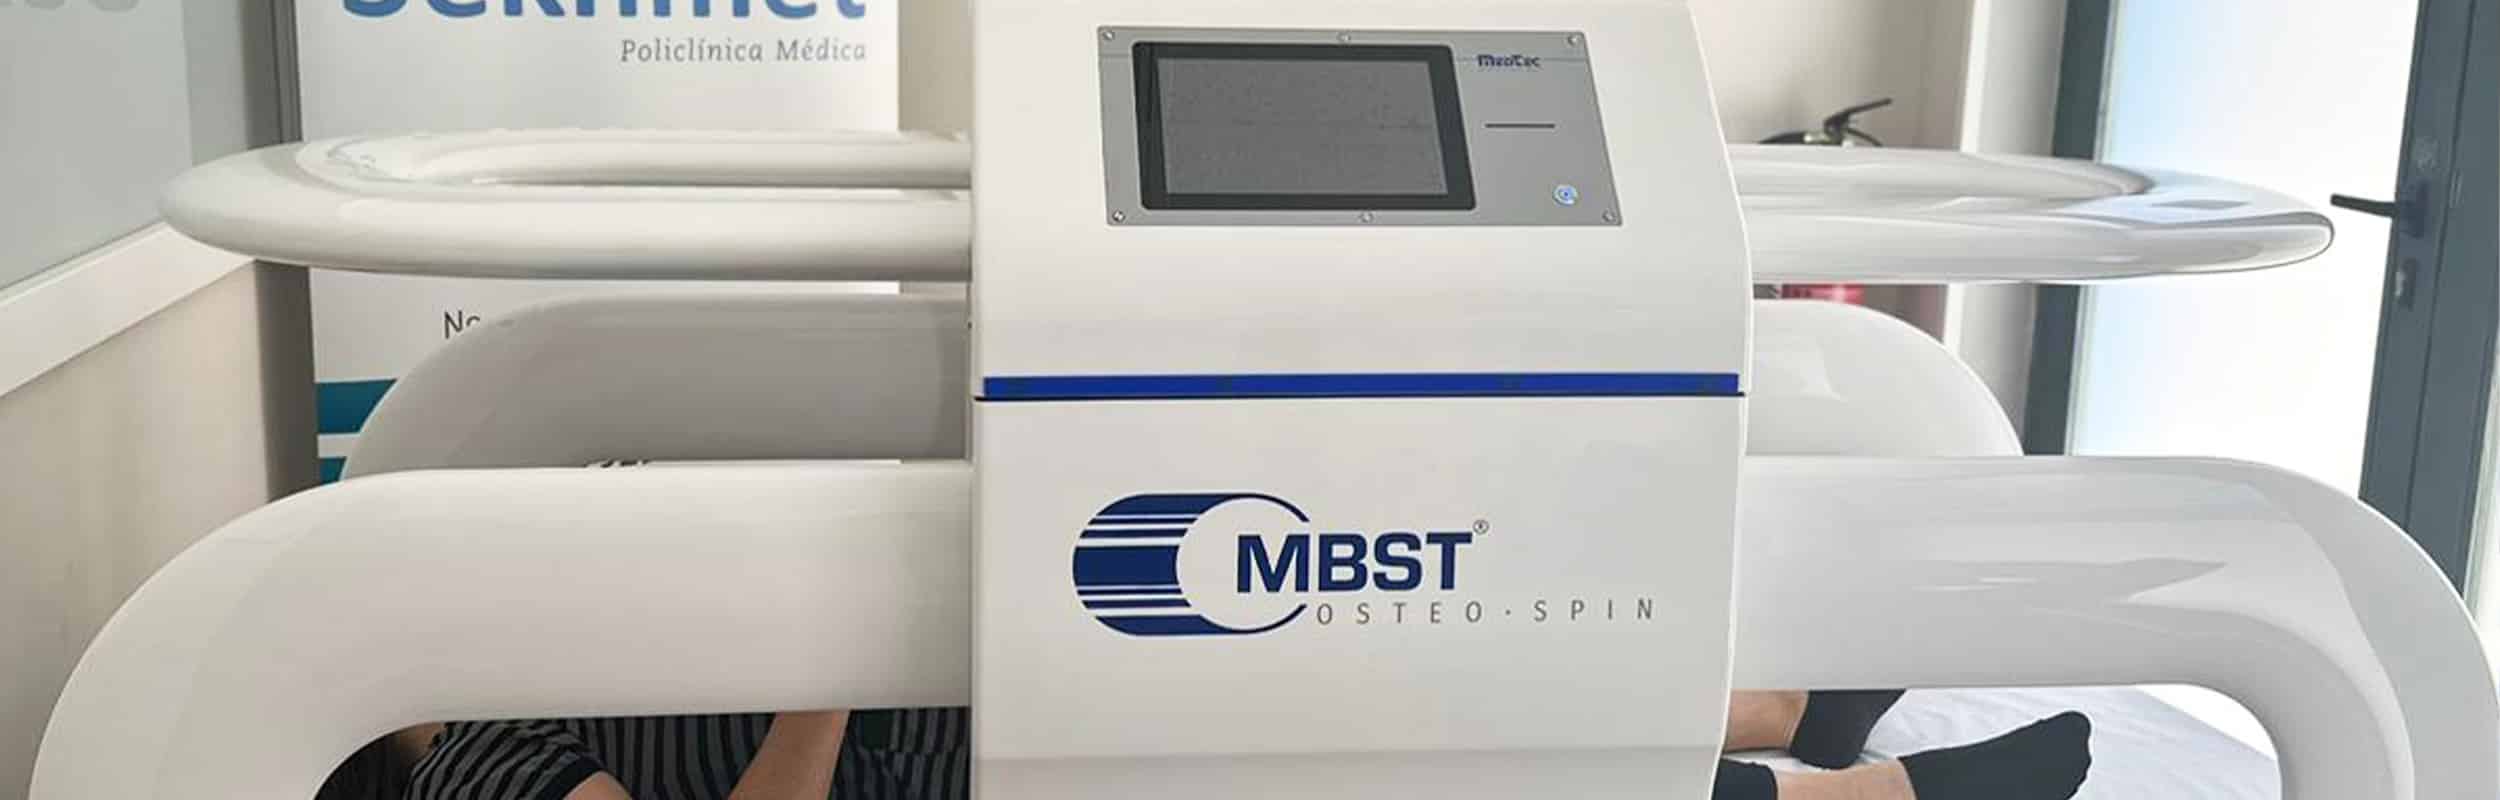 Máquinas MBST Fisioterapia